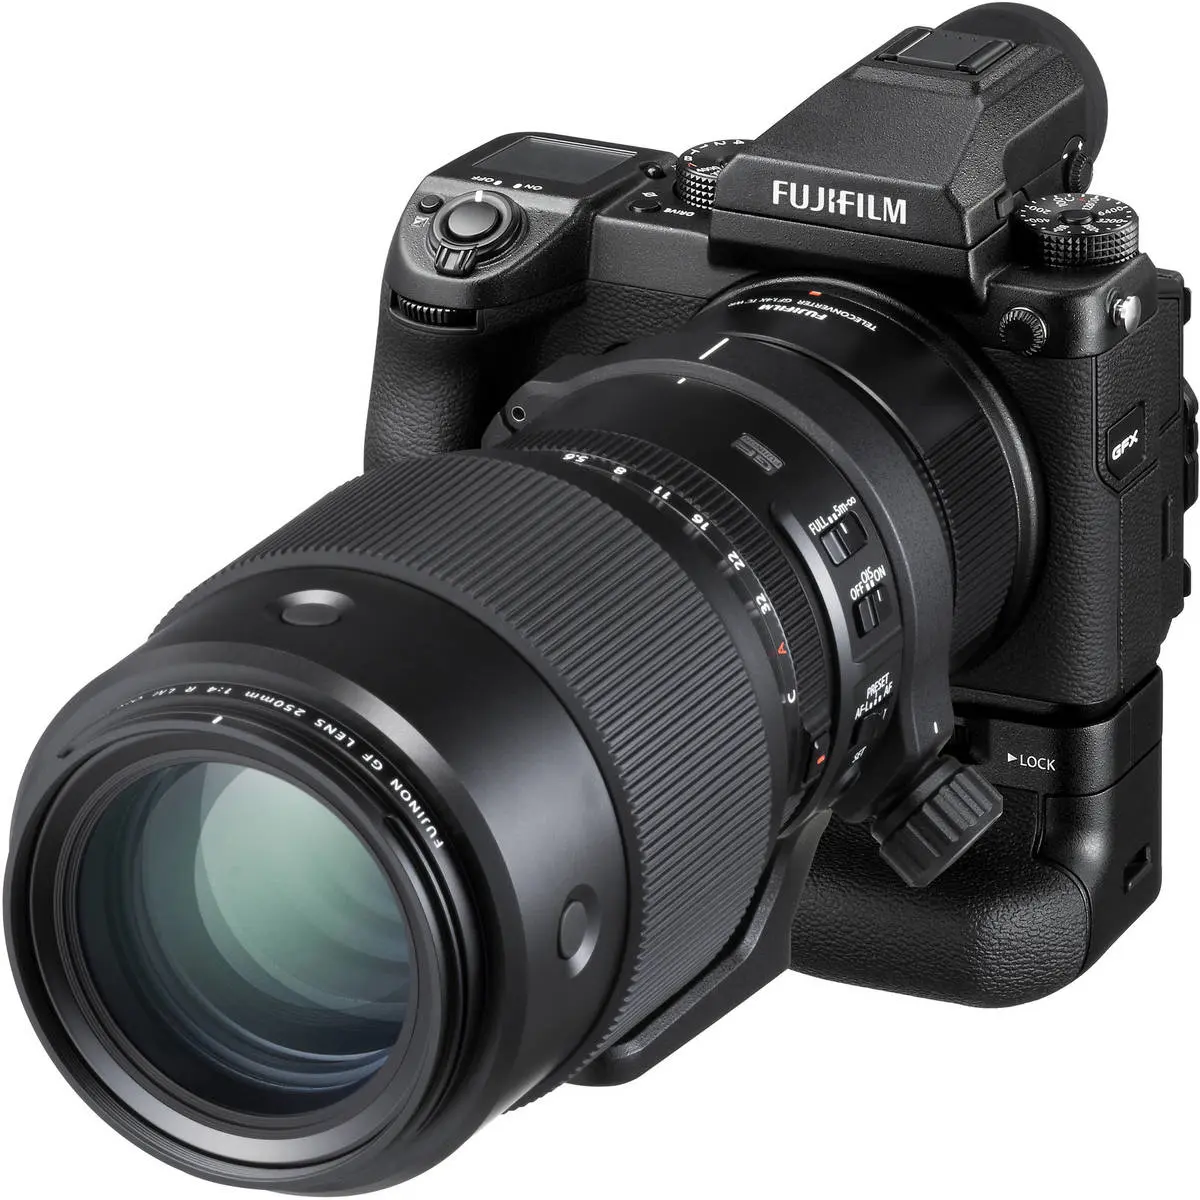 4. Fujifilm FUJINON GF 1.4X TC WR Teleconverter Lens